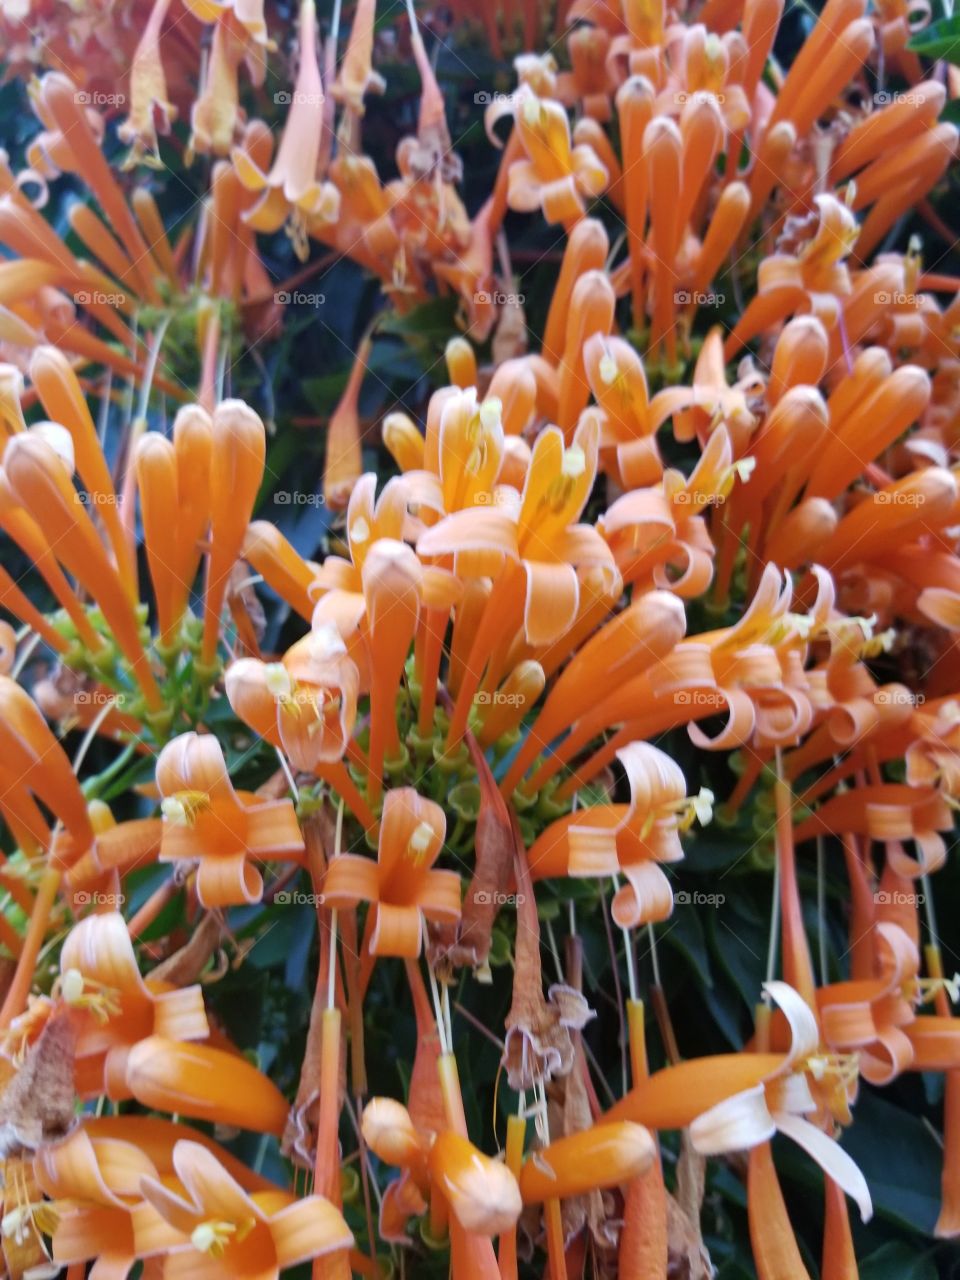 More orange flowers.